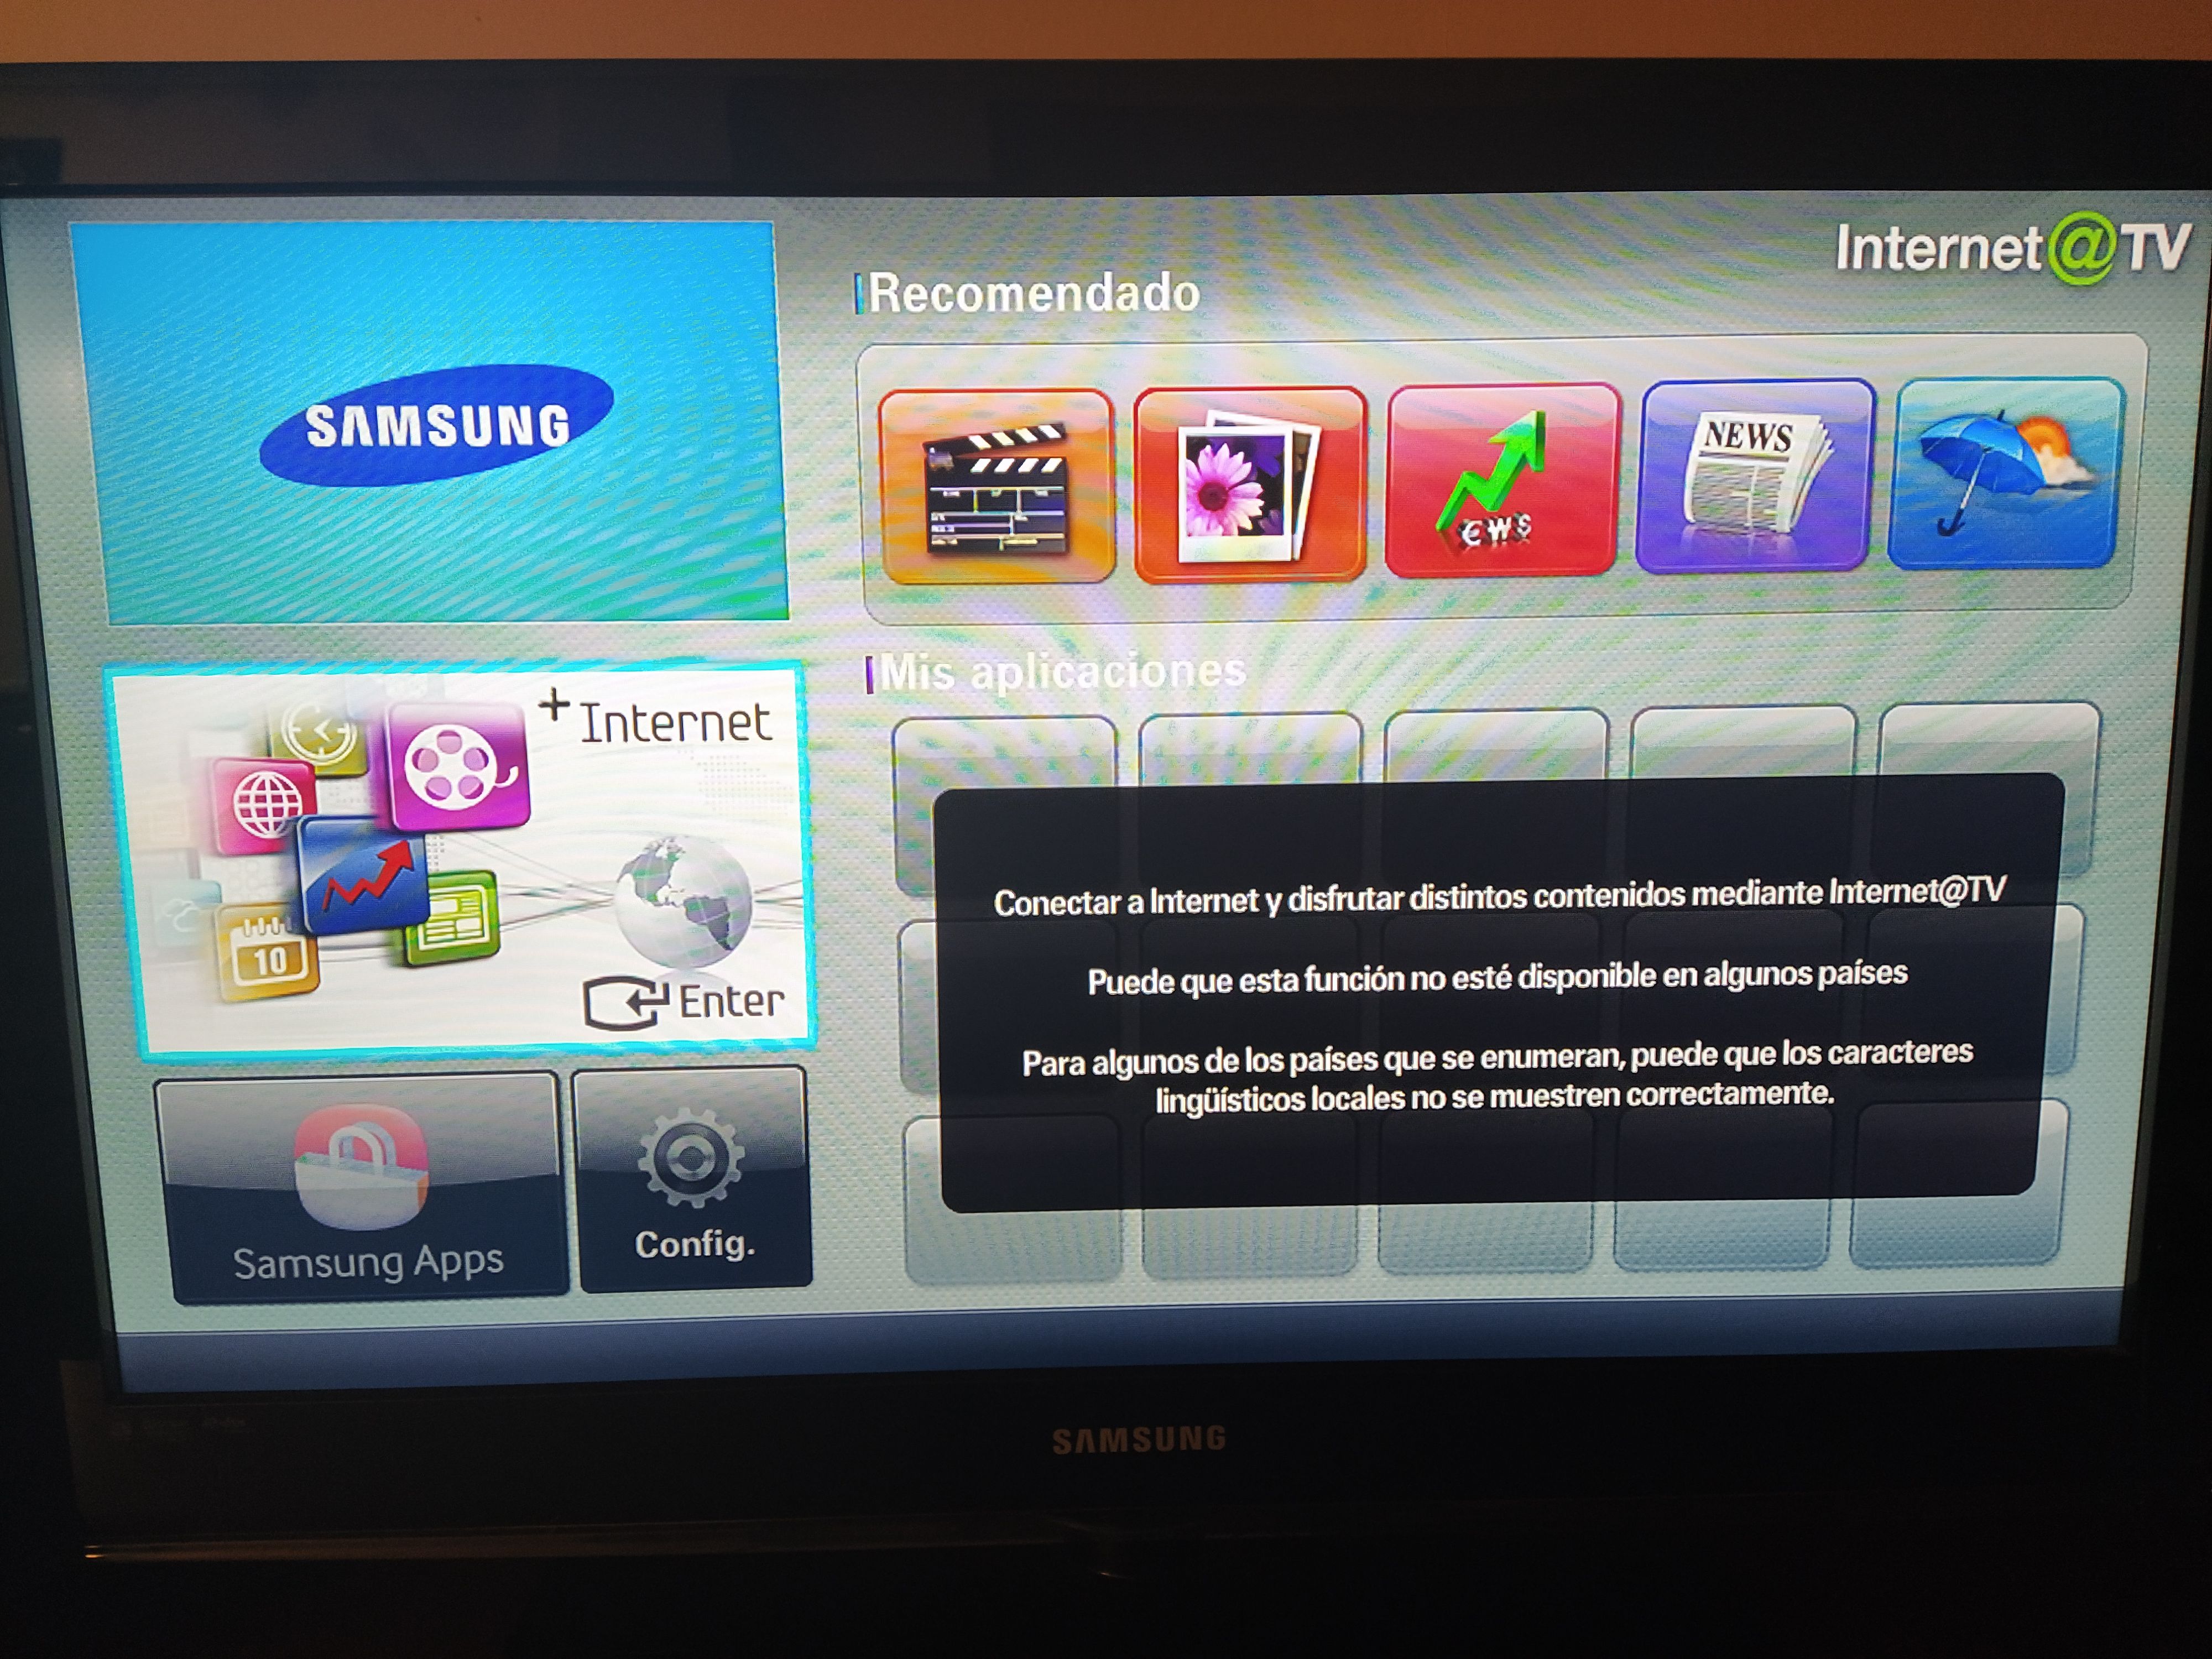 No funciona el menú internet@tv - Samsung Community